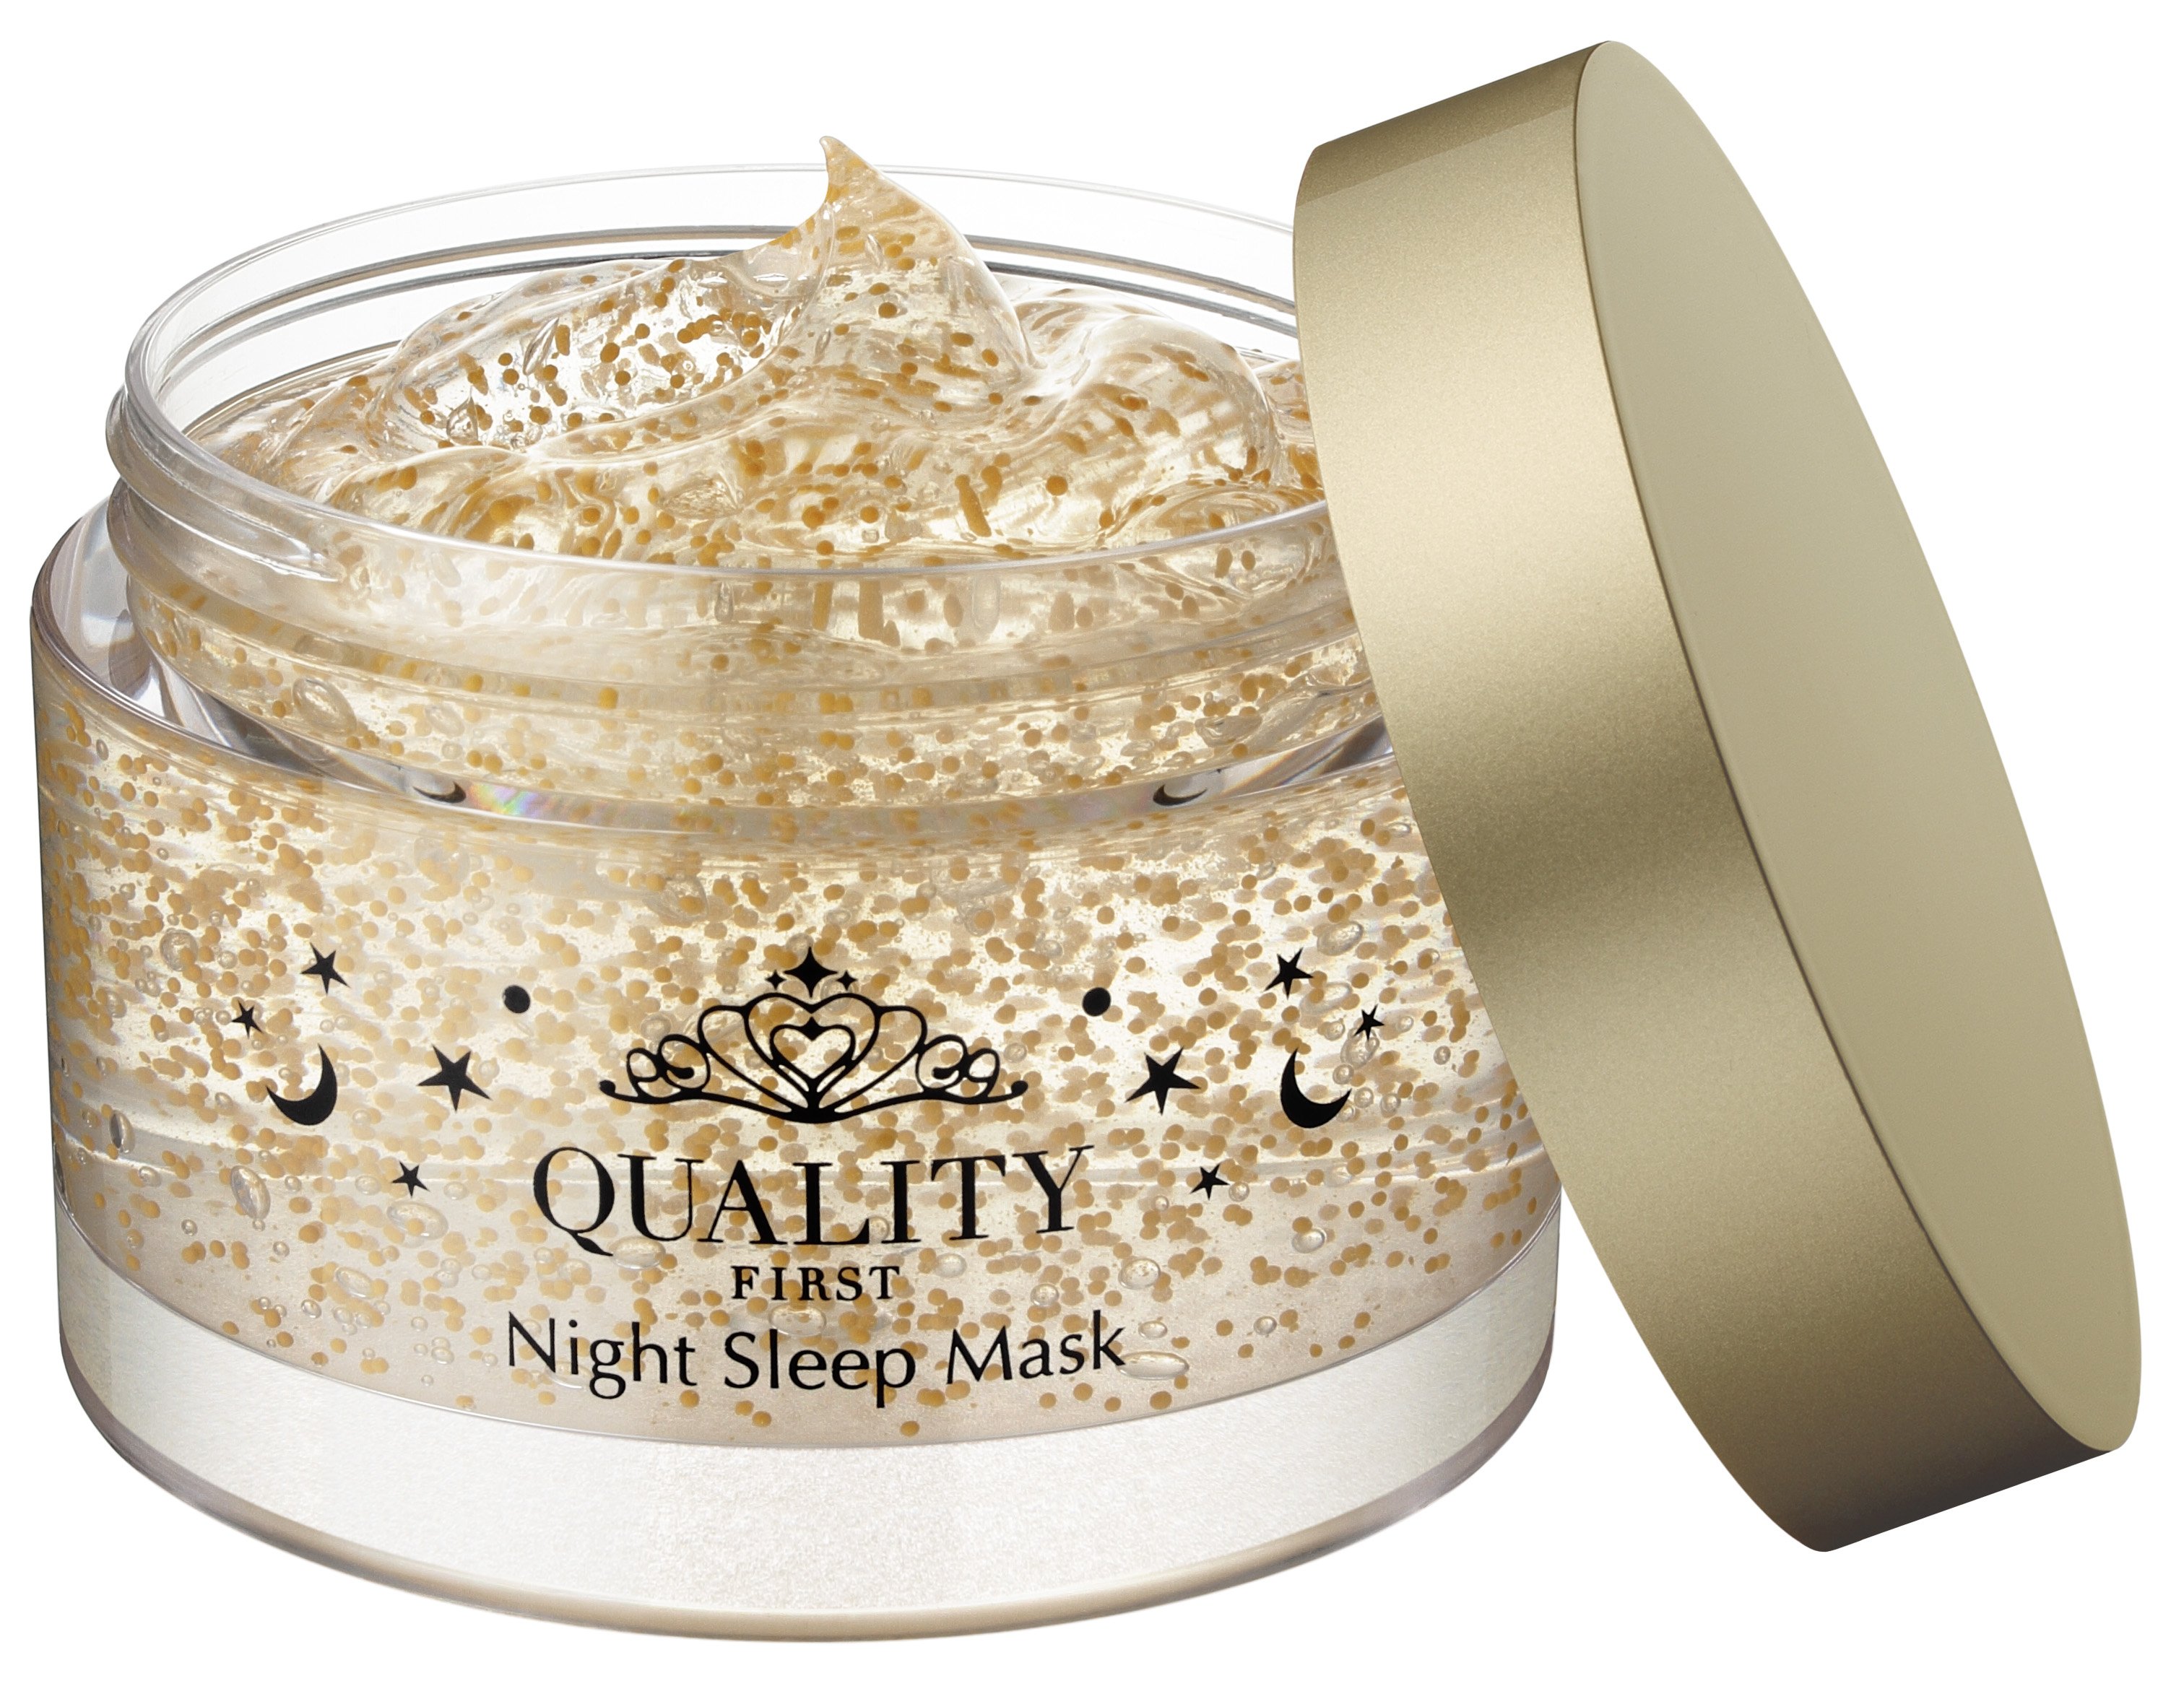 Quality 1st Queen’s Premium Mask Night Sleep Mask Ночная маска, 80 г